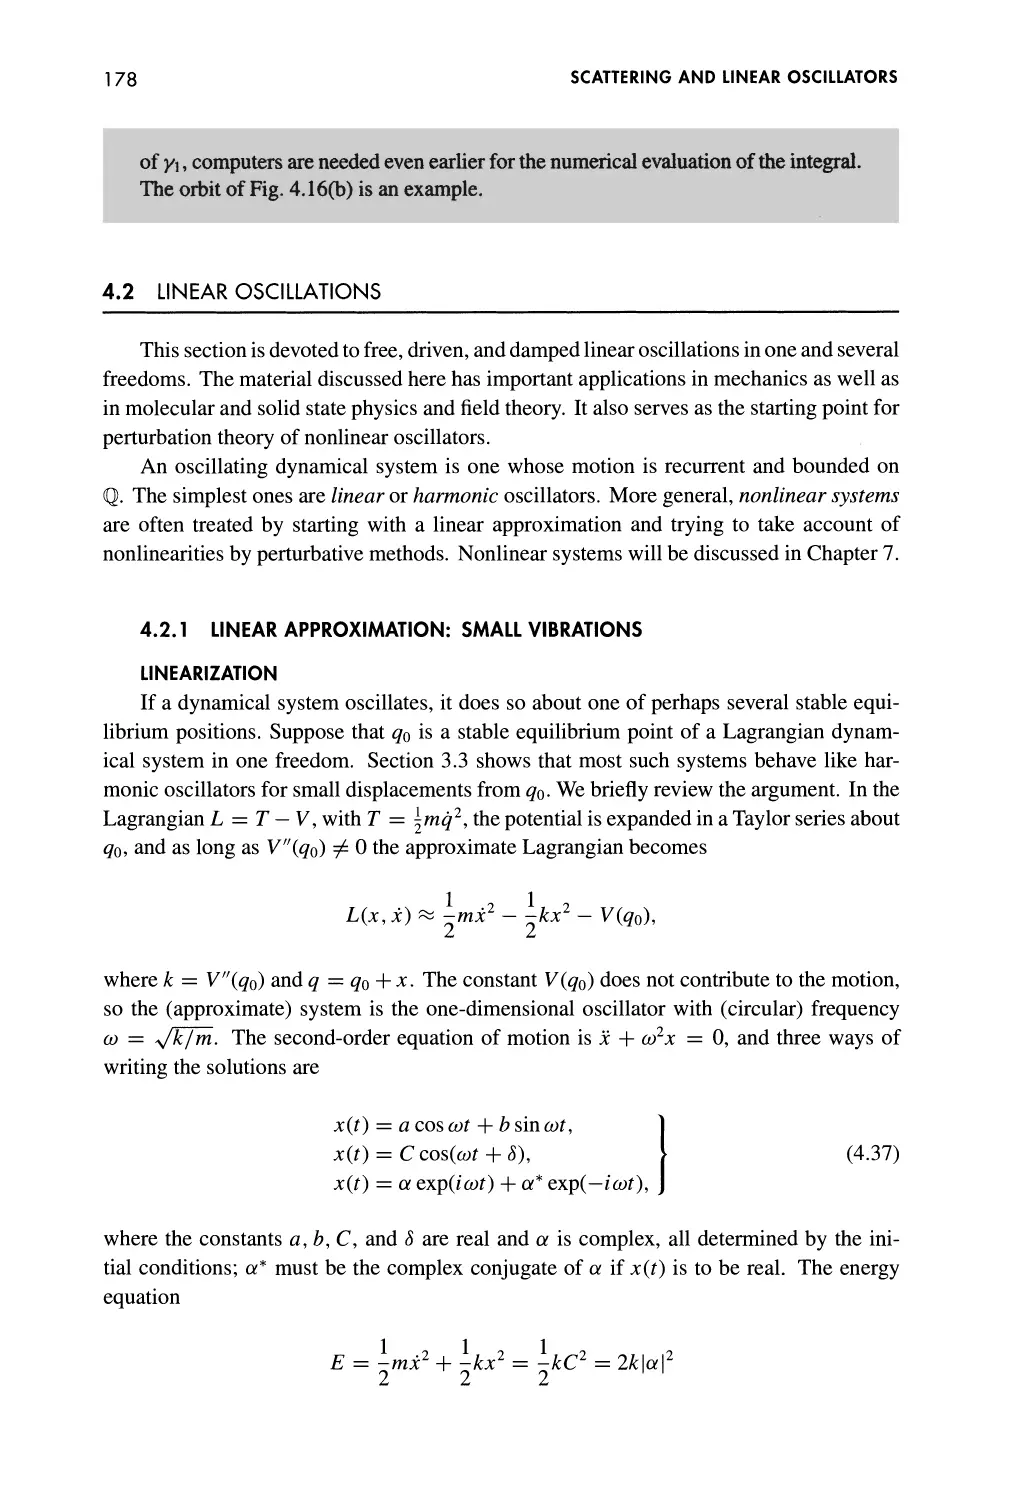 4.2 Linear Oscillations